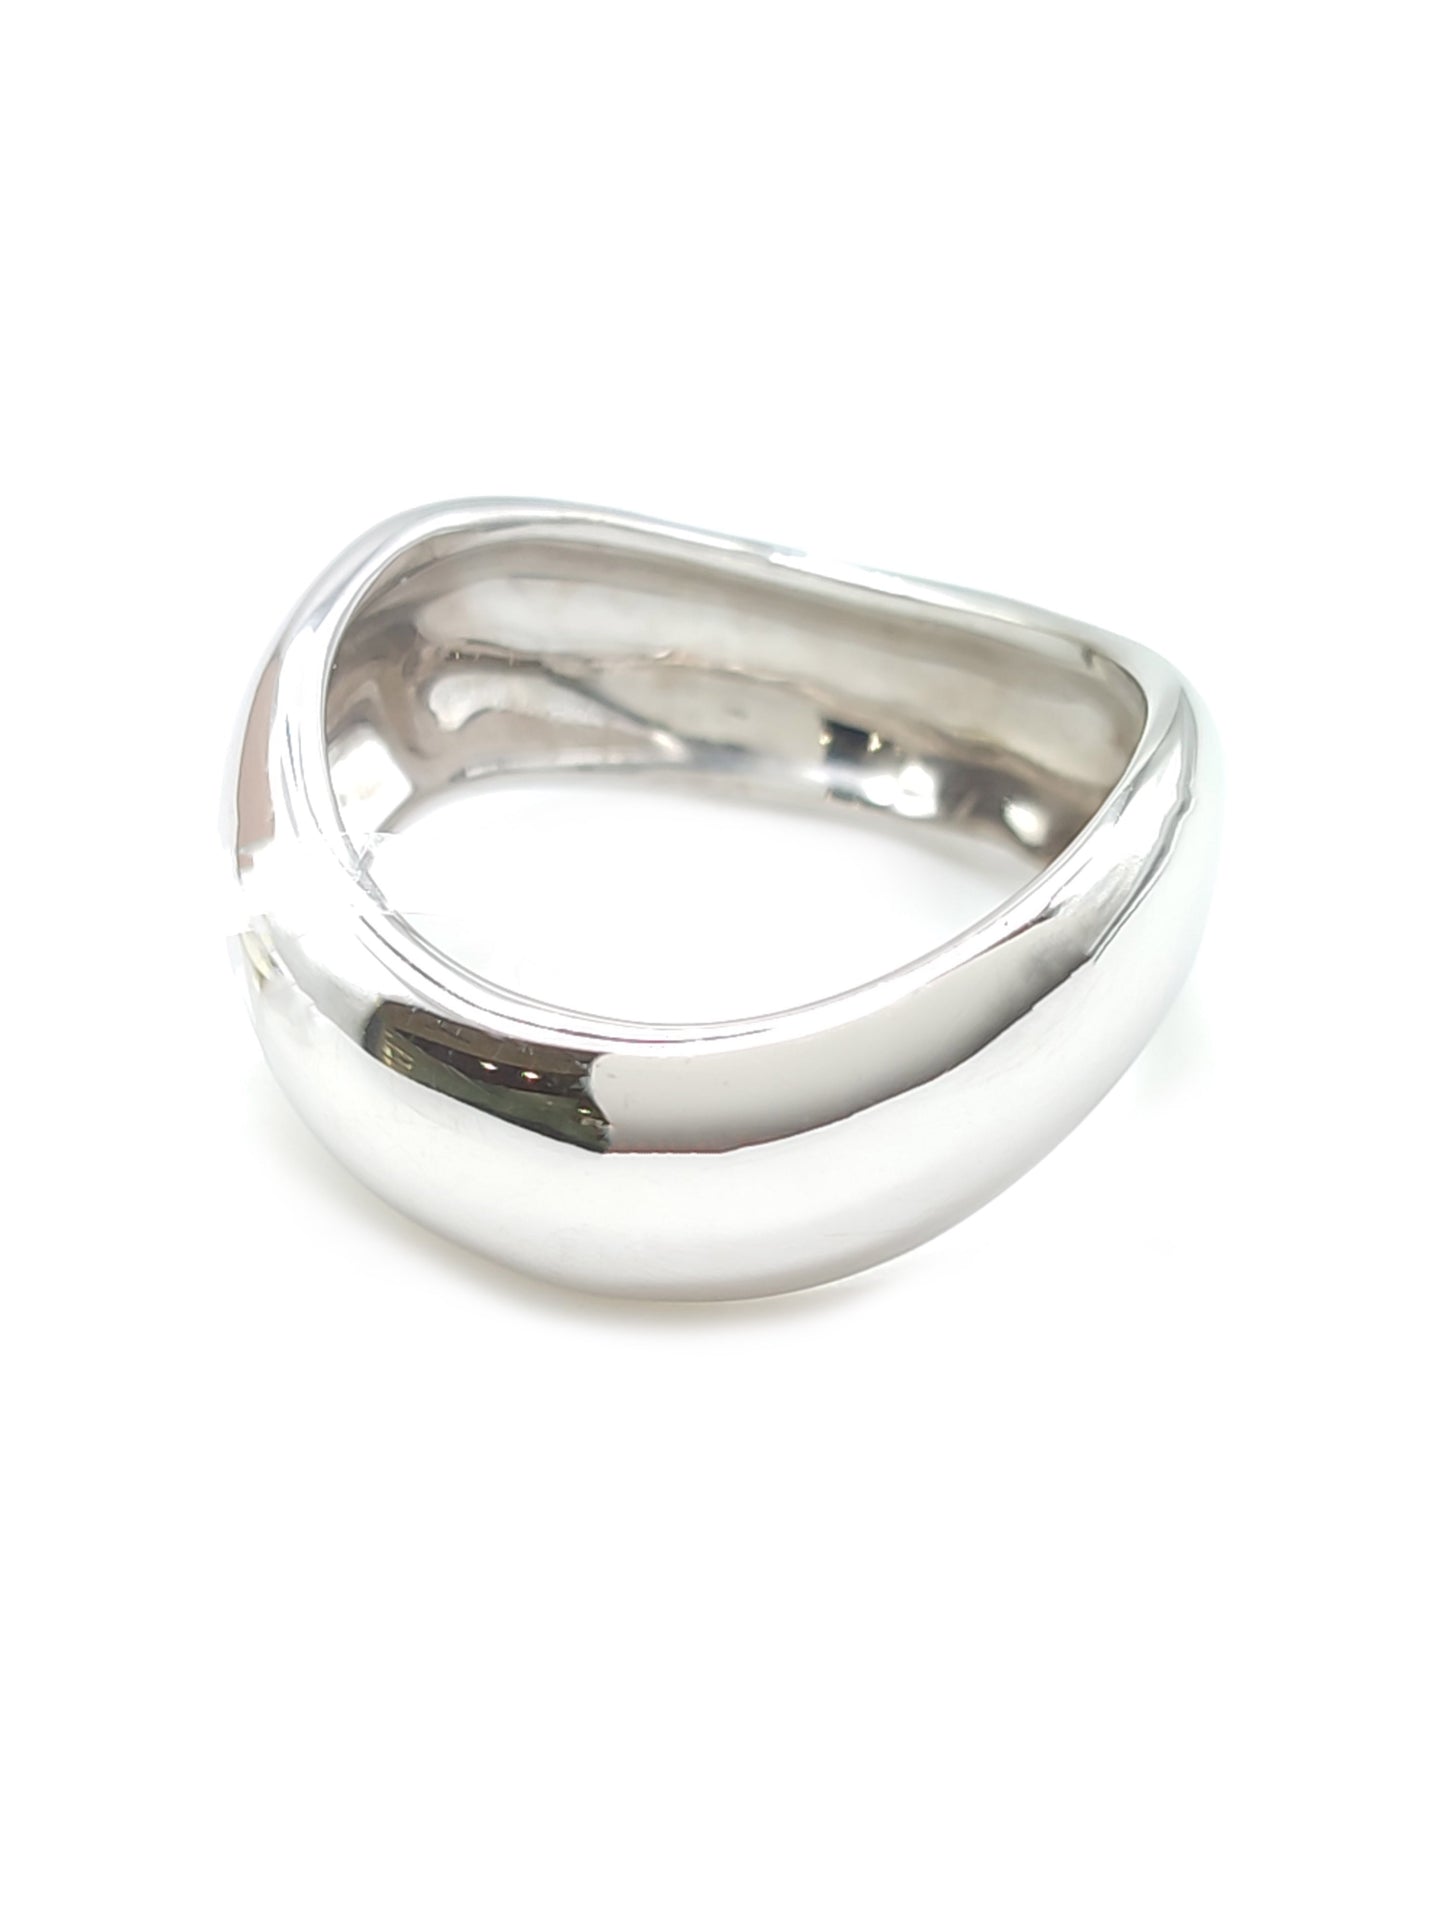 Wavy white gold band ring